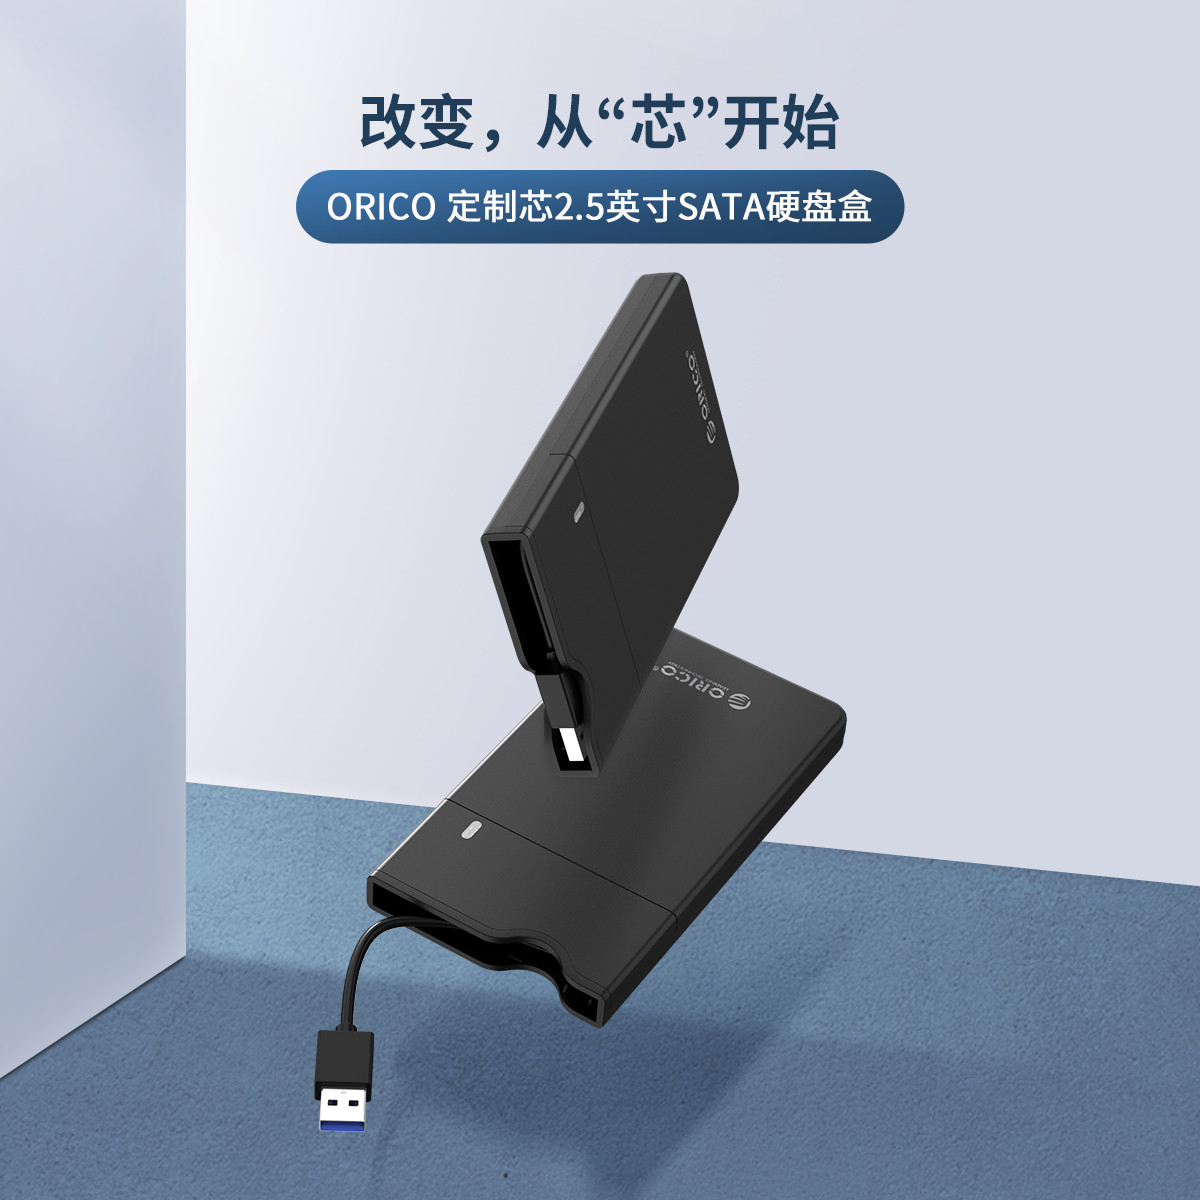 ORICO 2.5英寸SATA硬盘盒